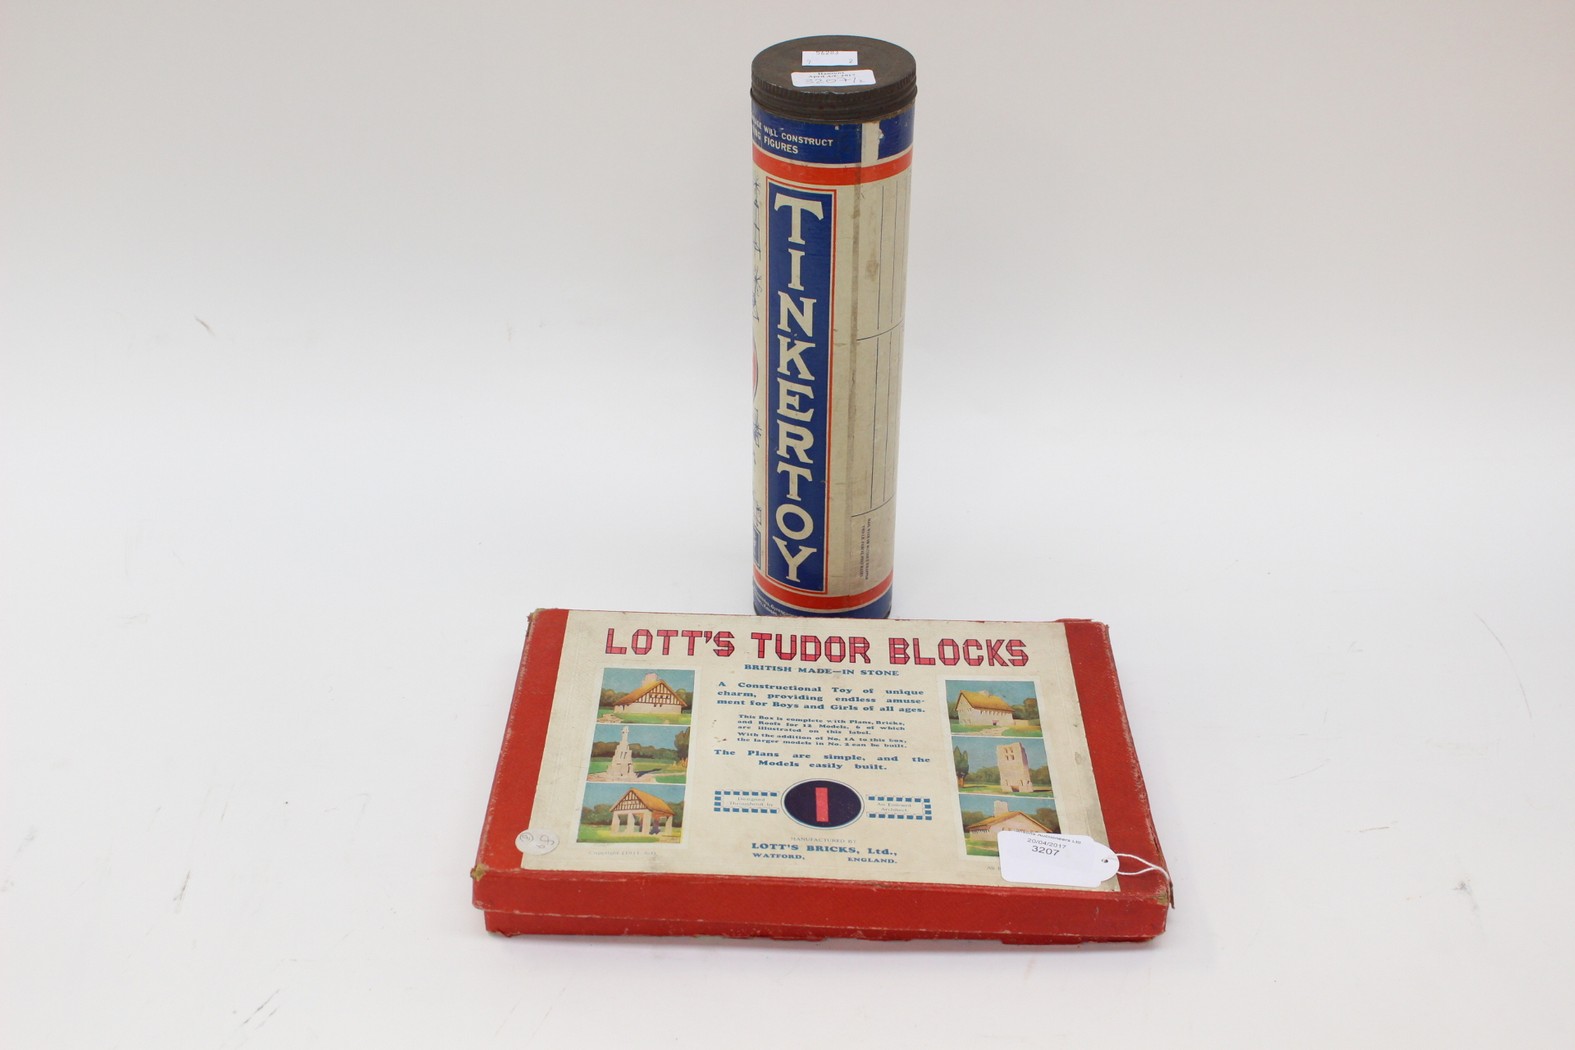 A Tube of Tinkertoy and Lotts Tudor blocks (2)